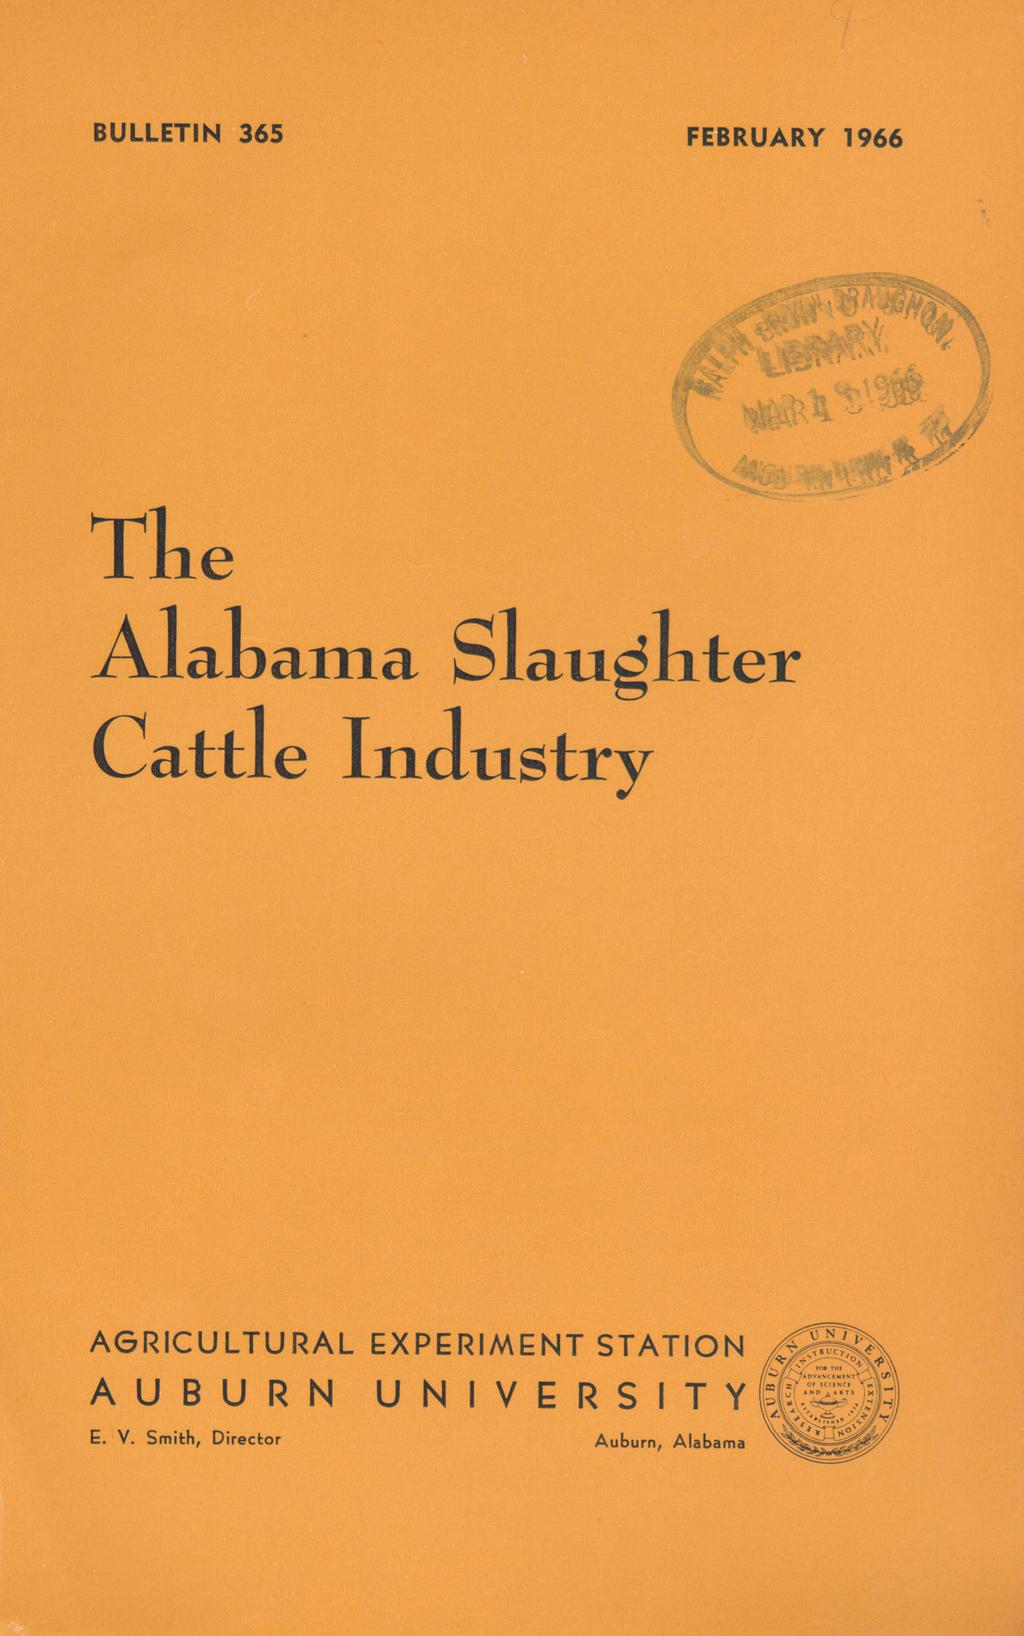 BULLETIN 365 BULLETN 365FEBRUARY 1966 The Alabama Slaughter Cattle Industry